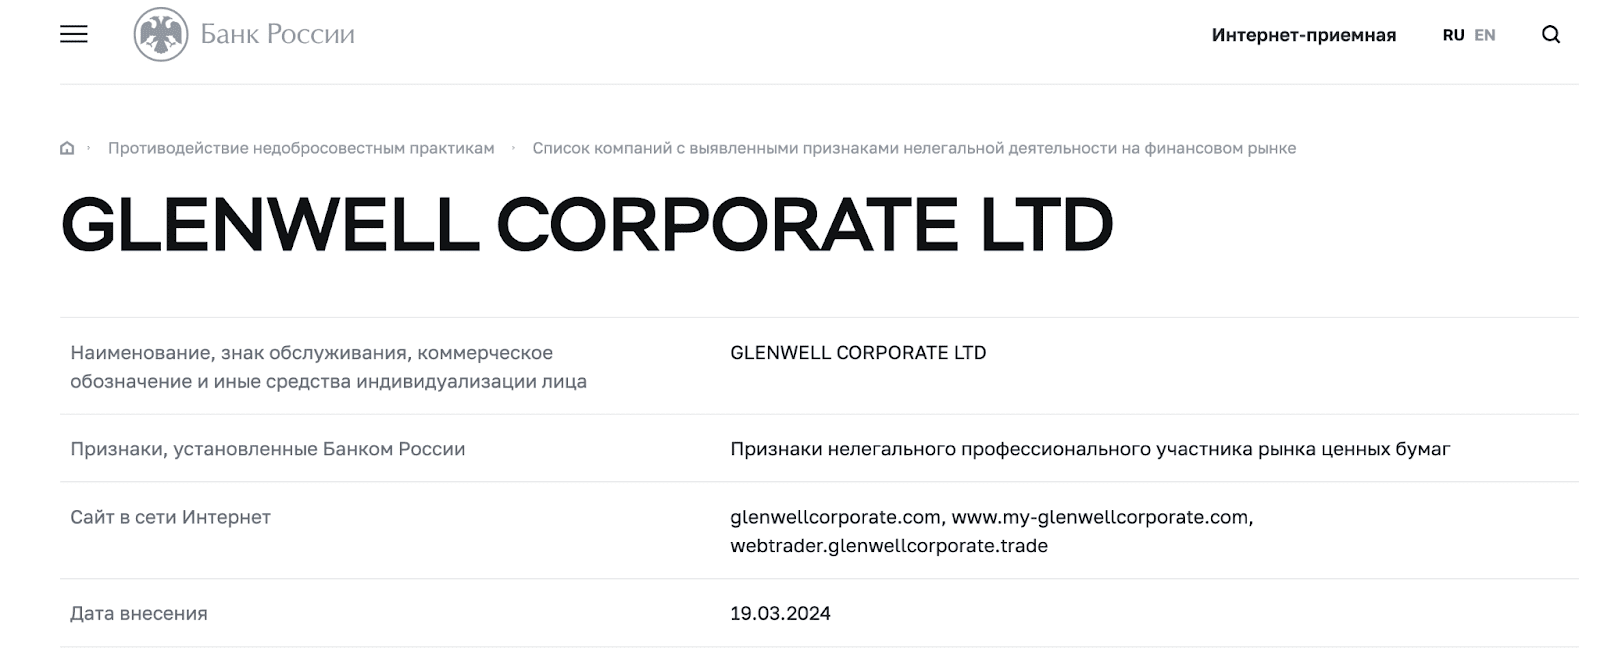 glenwell corporate ltd отзывы